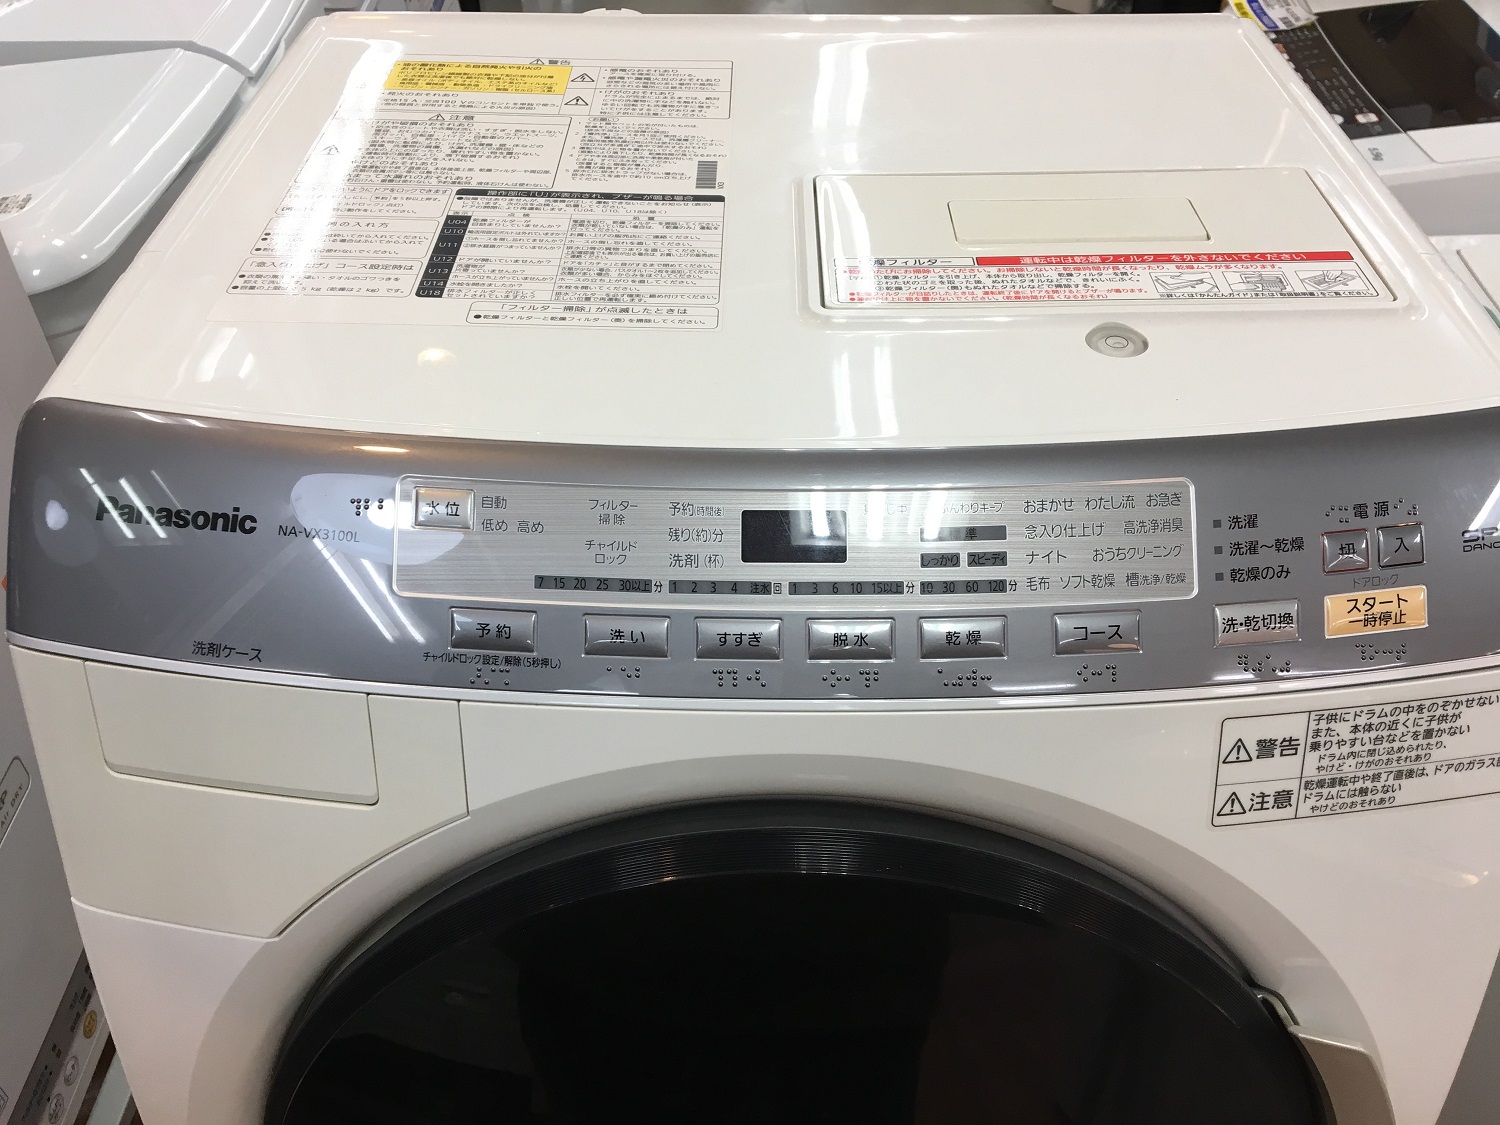 Panasonicの9.0kgドラム式洗濯乾燥機が買取入荷！【南大沢店】 [2019.02.08発行]｜リサイクルショップ トレジャー